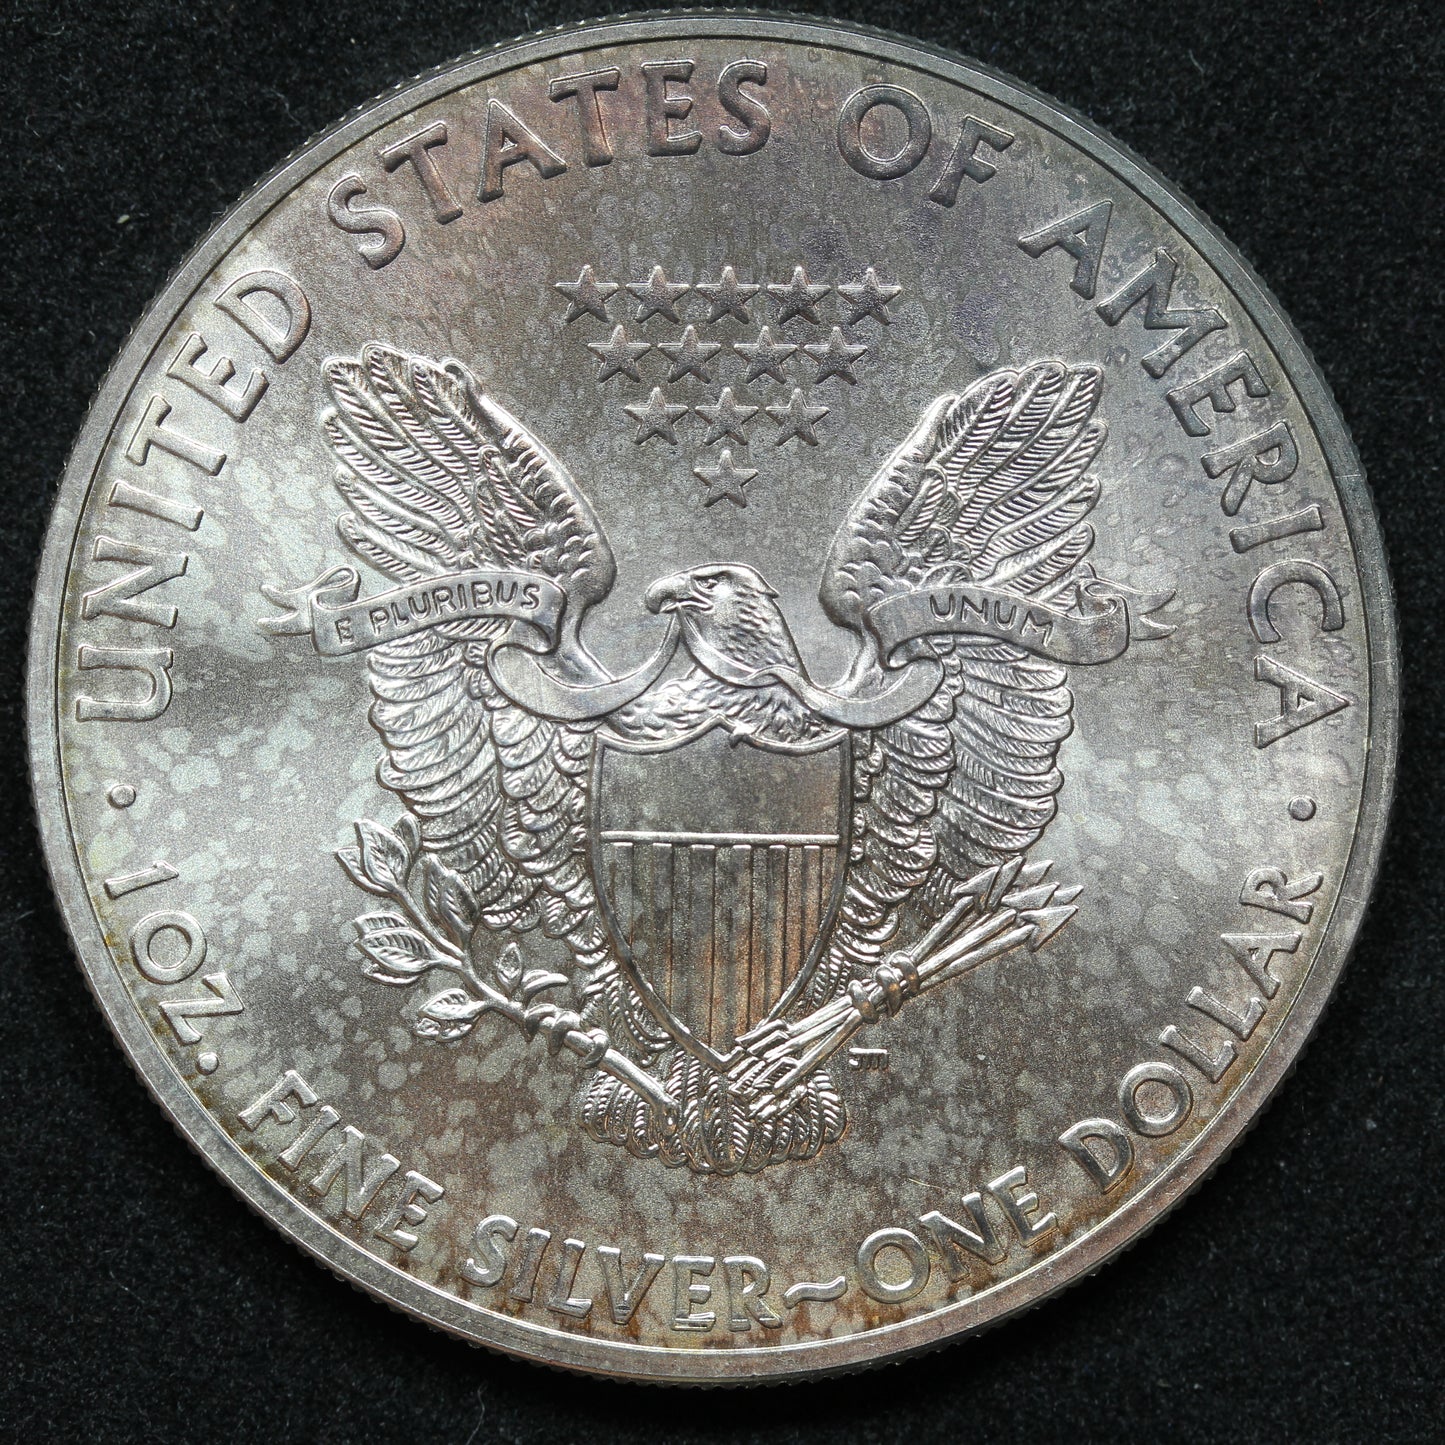 2015 American Silver Eagle $1 Bullion Coin .999 - Crazy Toning!